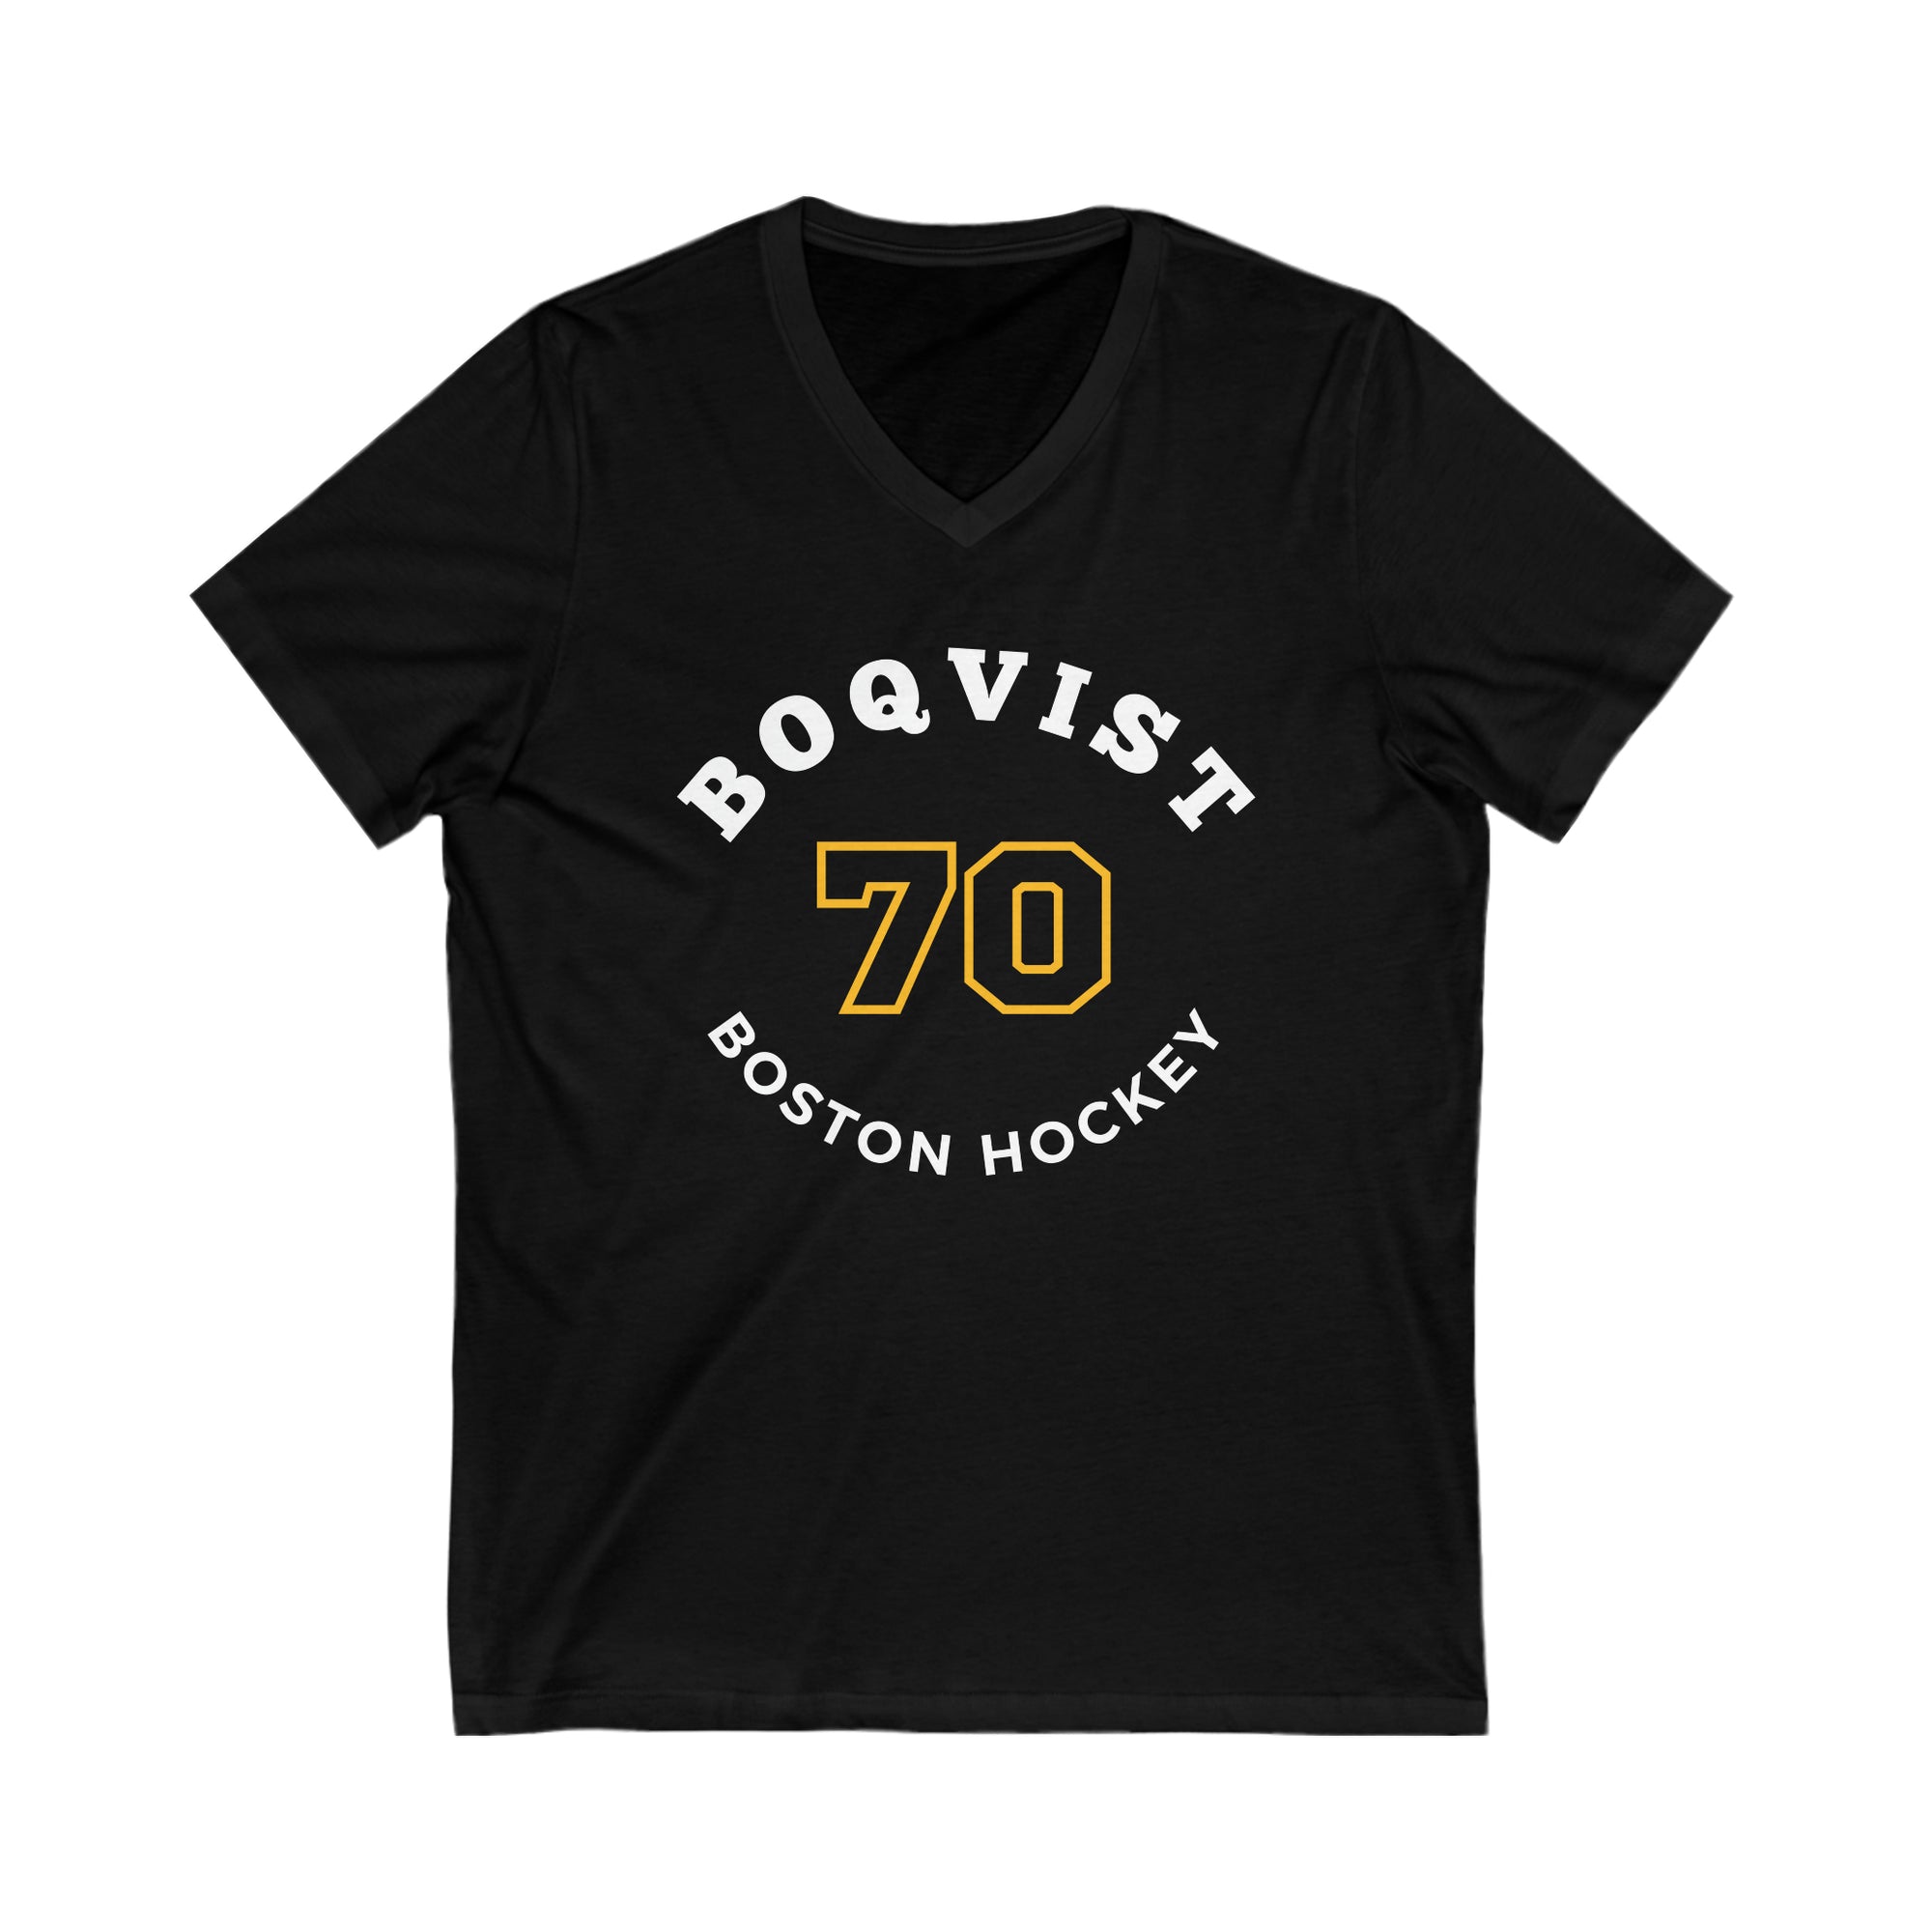 Boqvist 70 Boston Hockey Number Arch Design Unisex V-Neck Tee